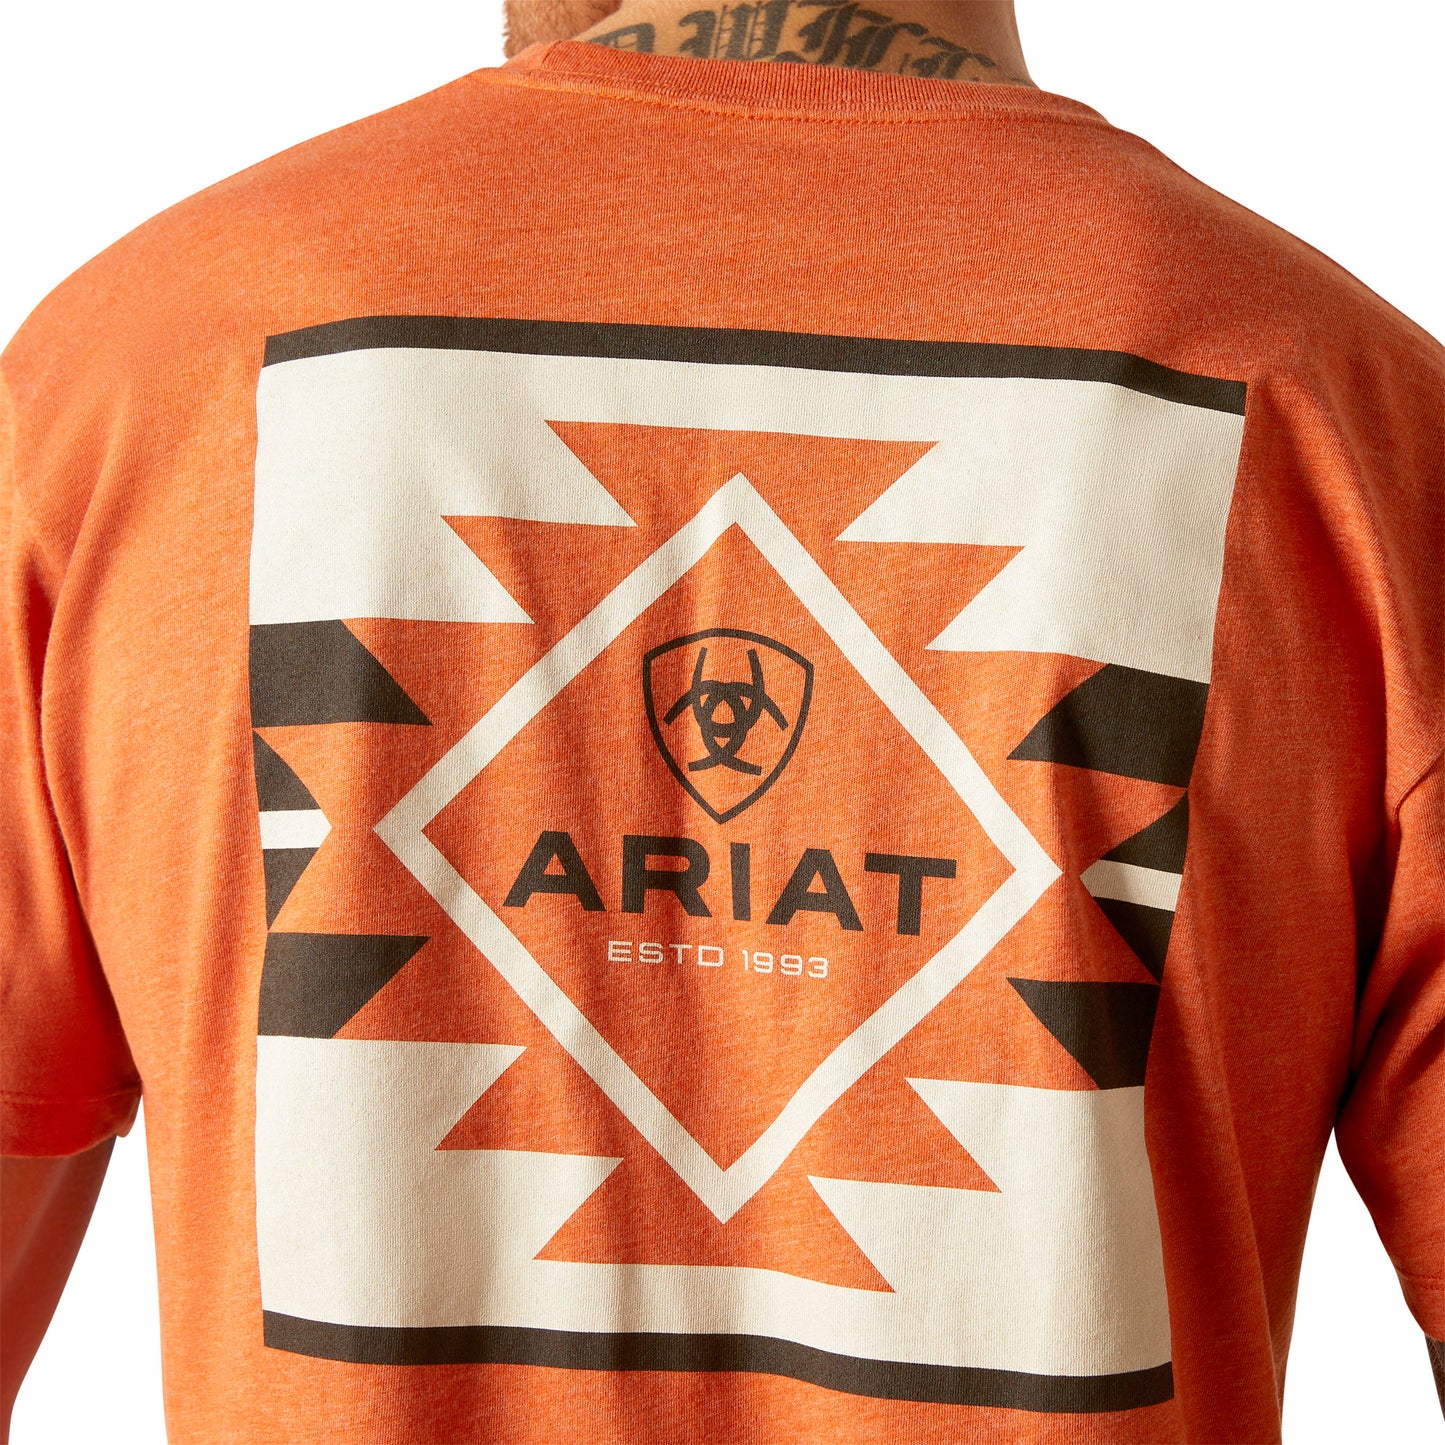 Ariat Men's SW Box Adobe Heather Short Sleeve T-Shirt 10047611